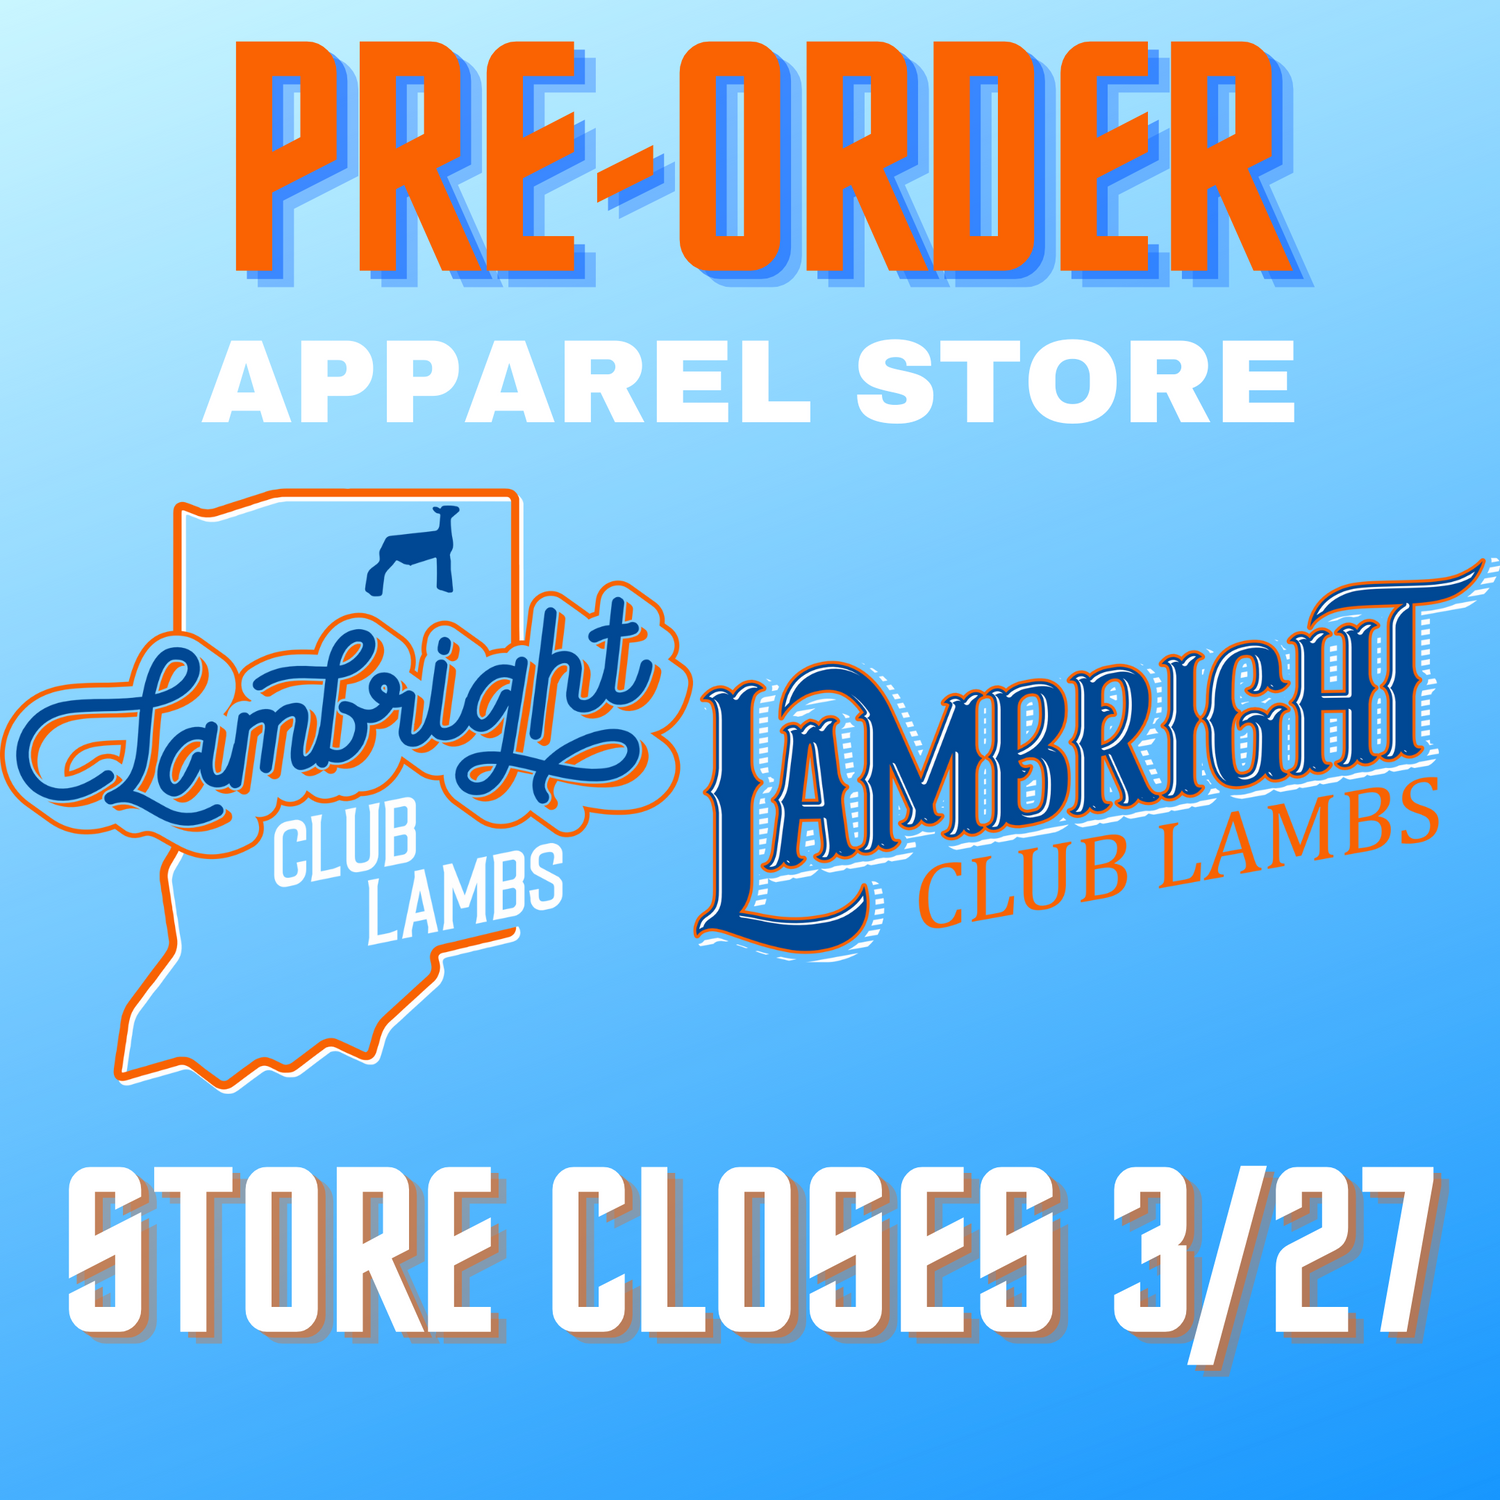 Lambright Club Lambs Pre-Order Apparel Store